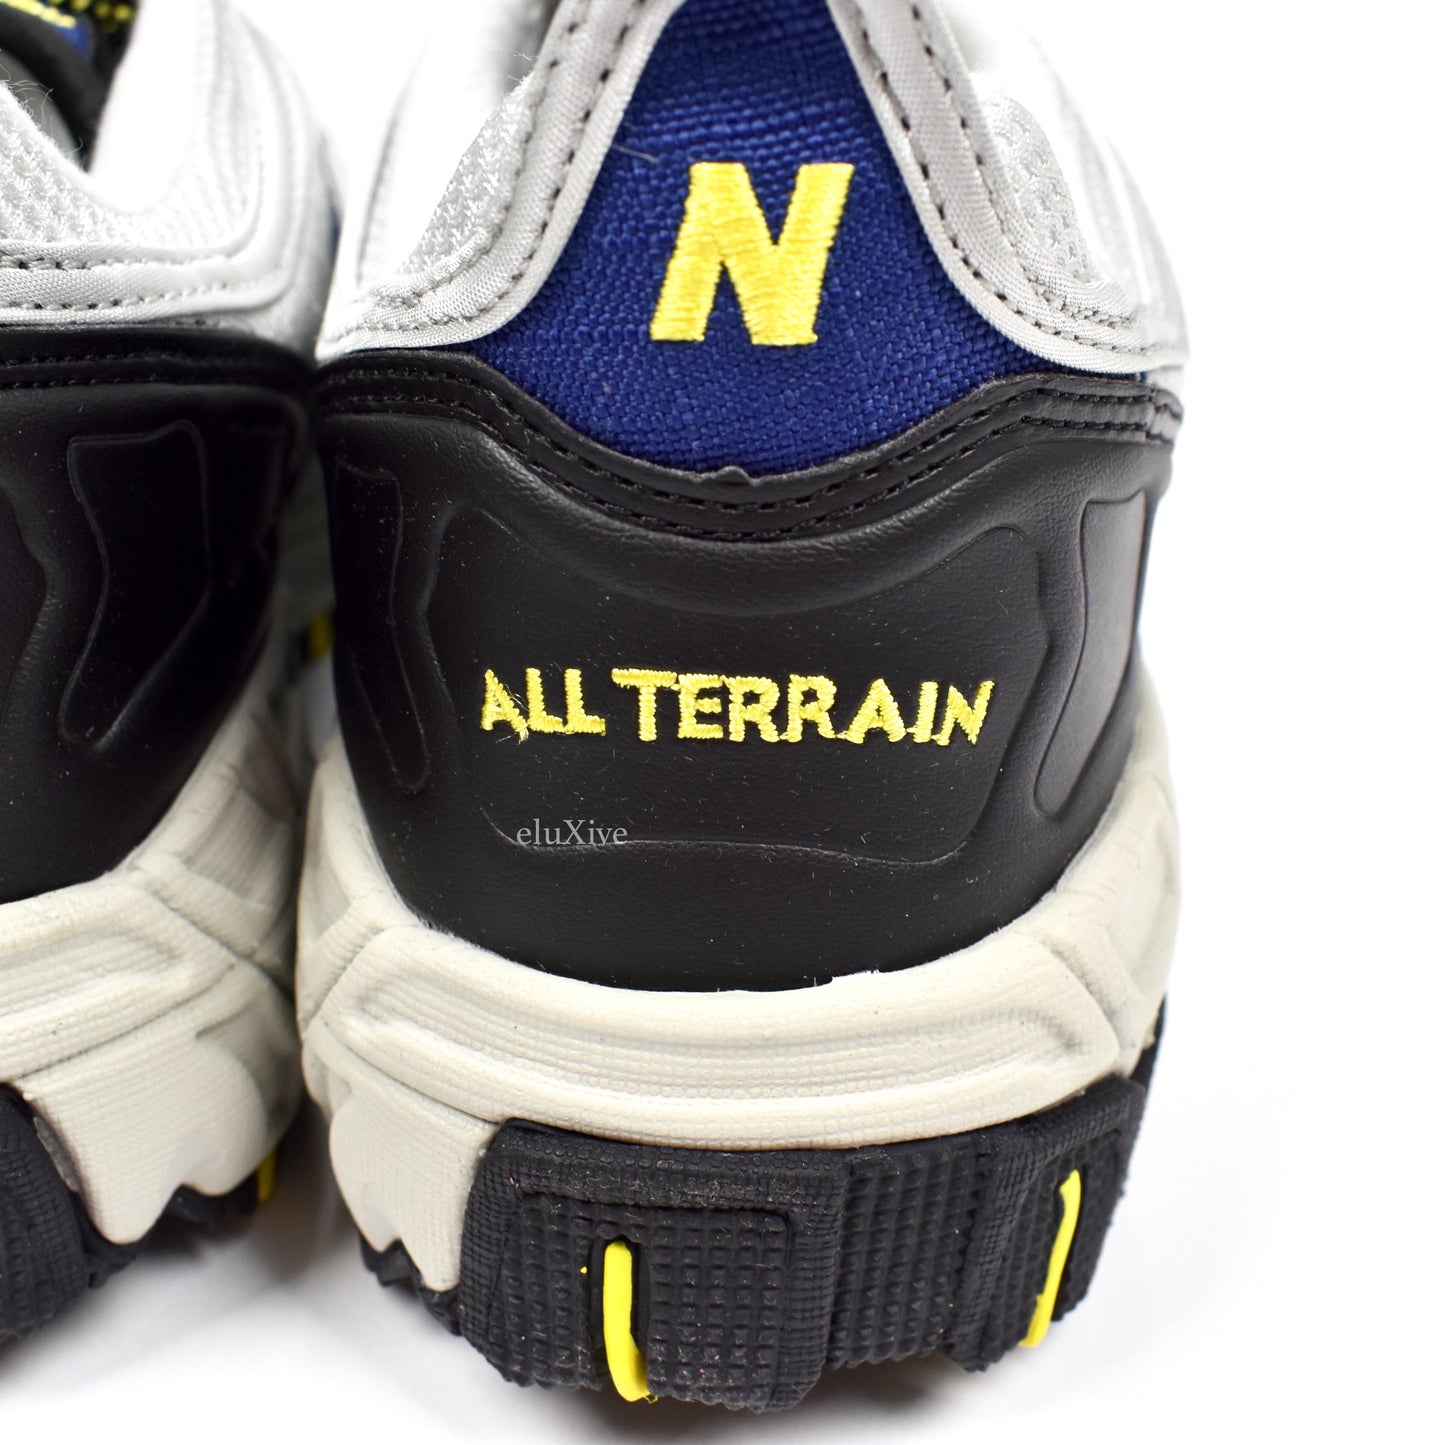 New Balance - 801 All Terrain Trail Sneakers (Gray)